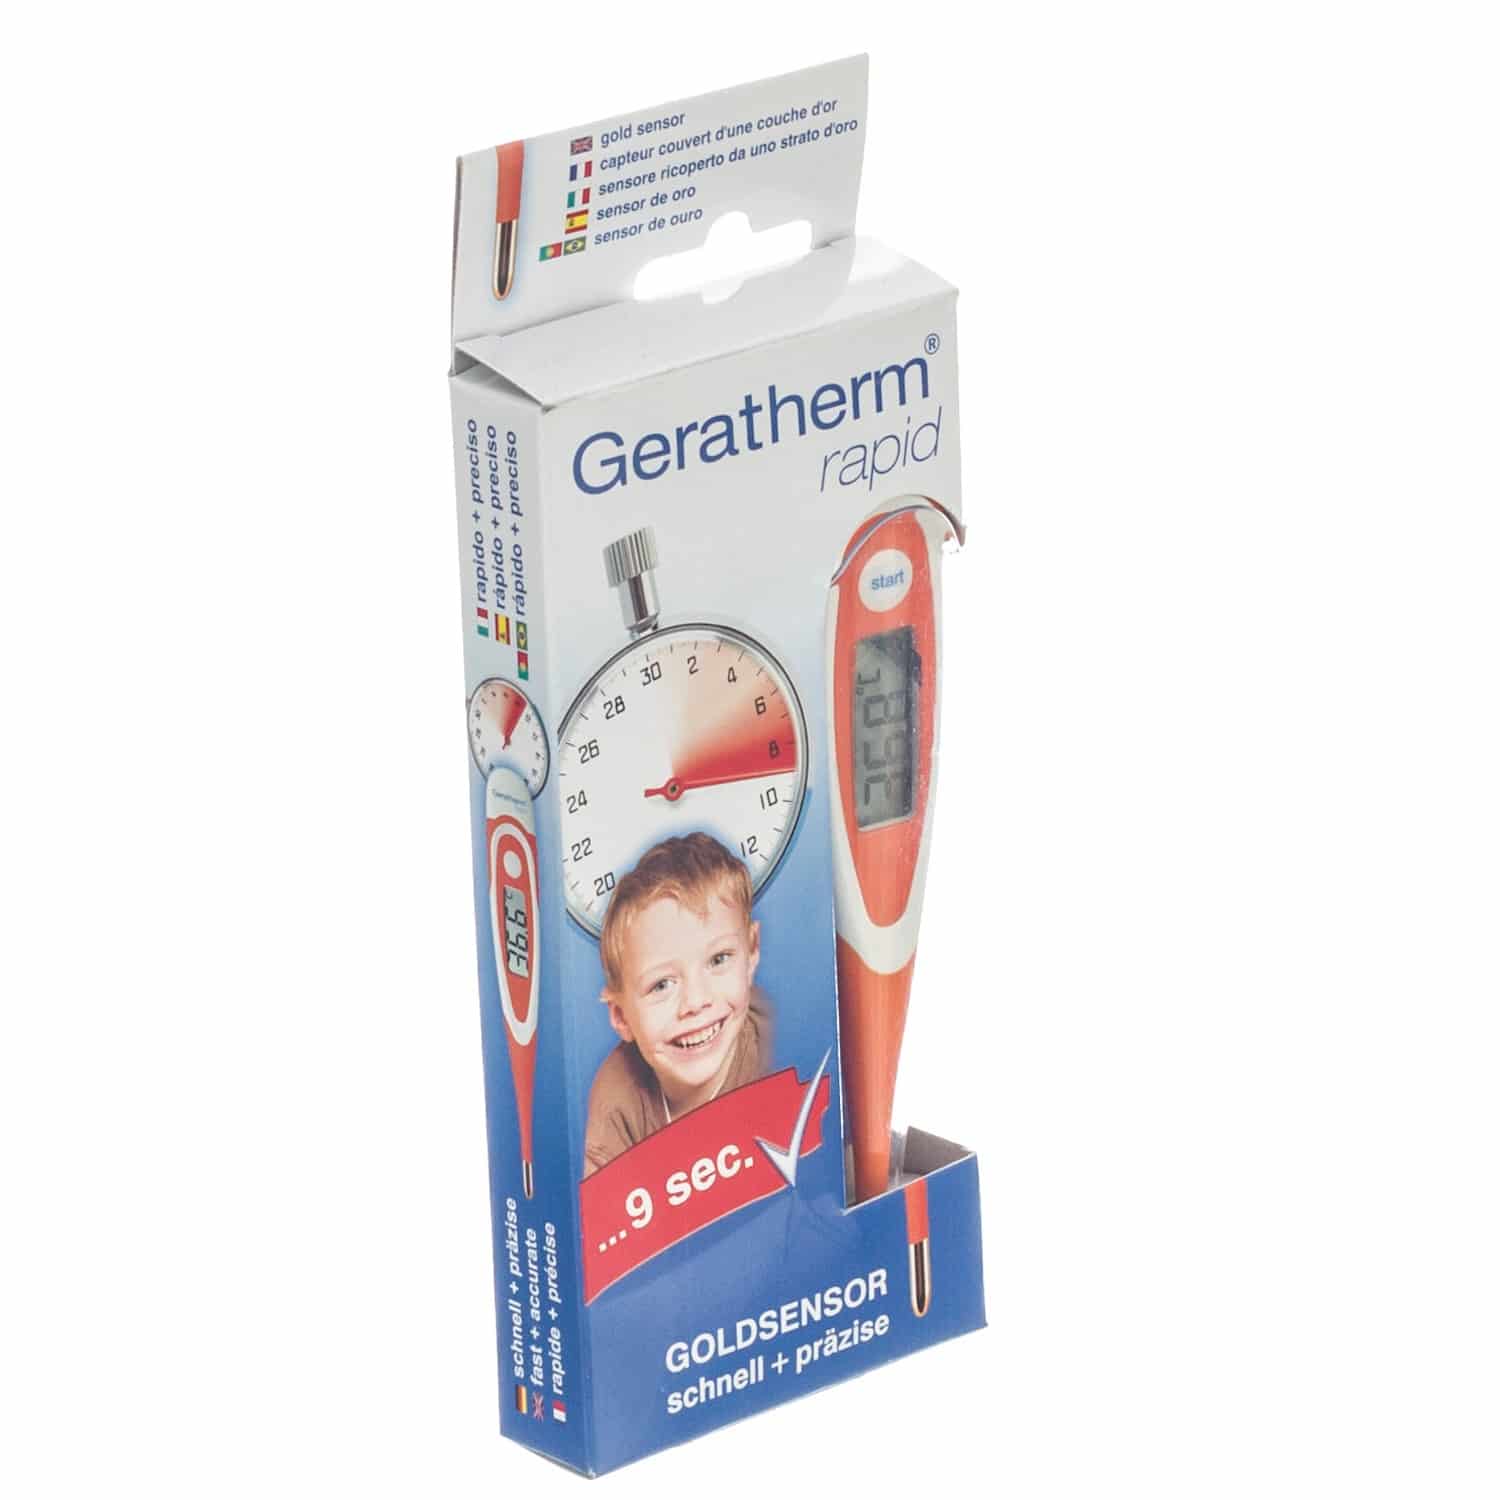 Geratherm Rapid Thermometer